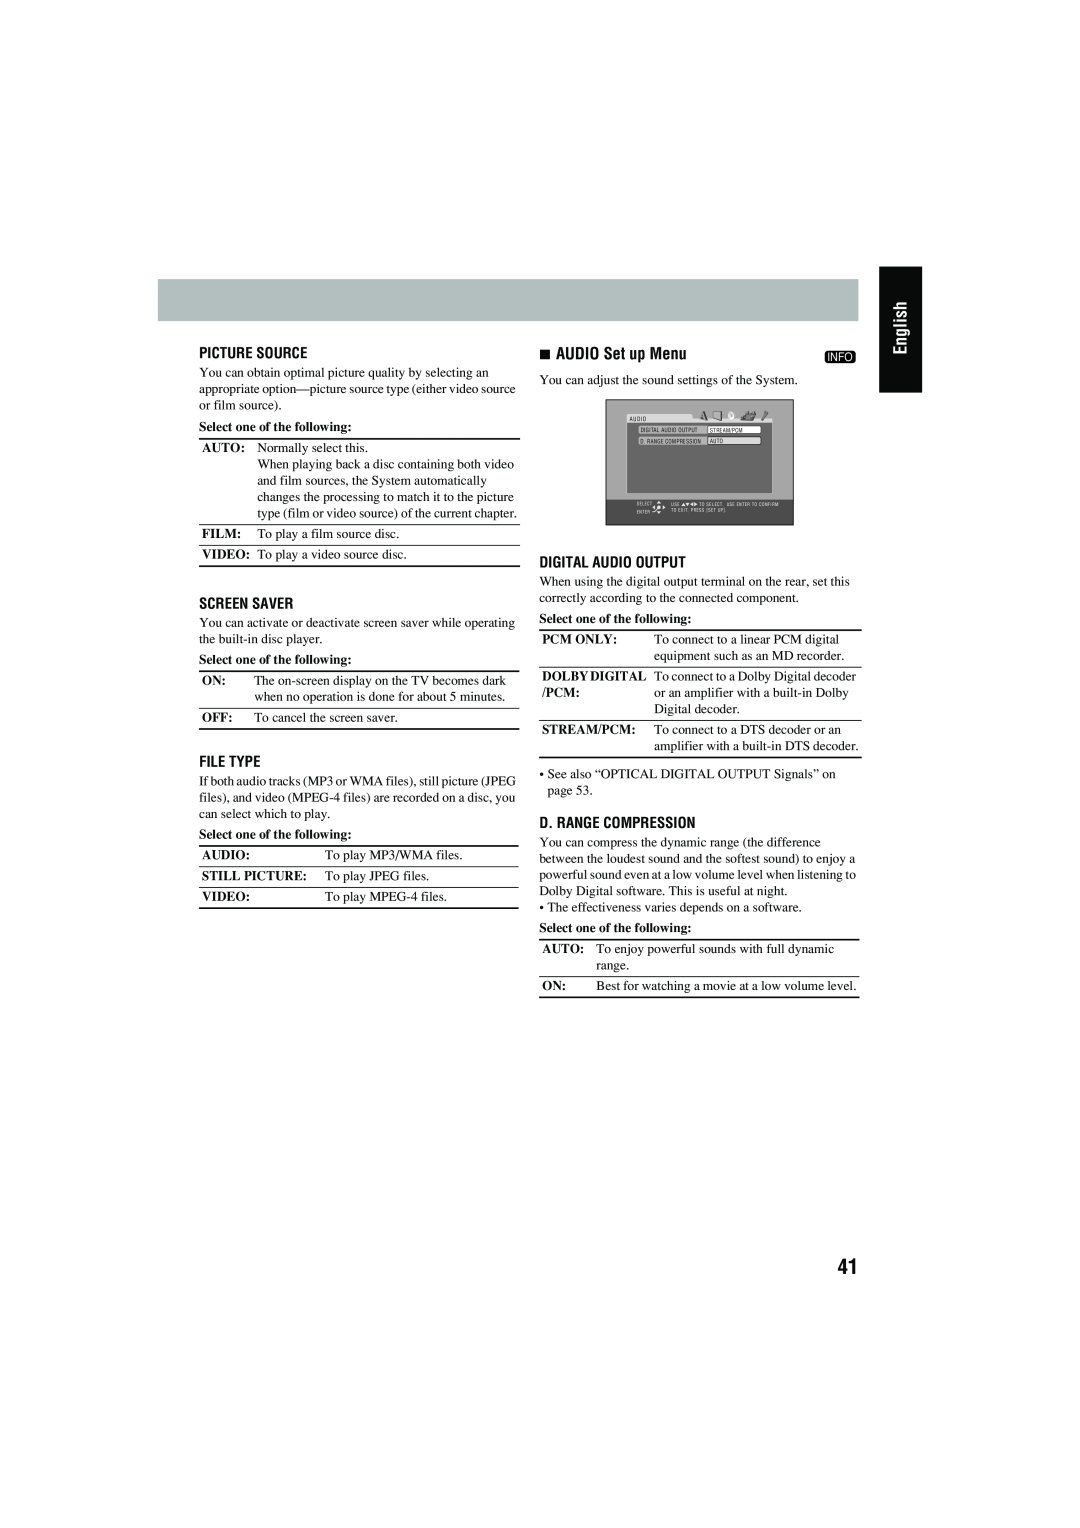 JVC CA-MXJD8 manual English, AUDIO Set up Menu, Picture Source, Screen Saver, File Type, Digital Audio Output, Video 